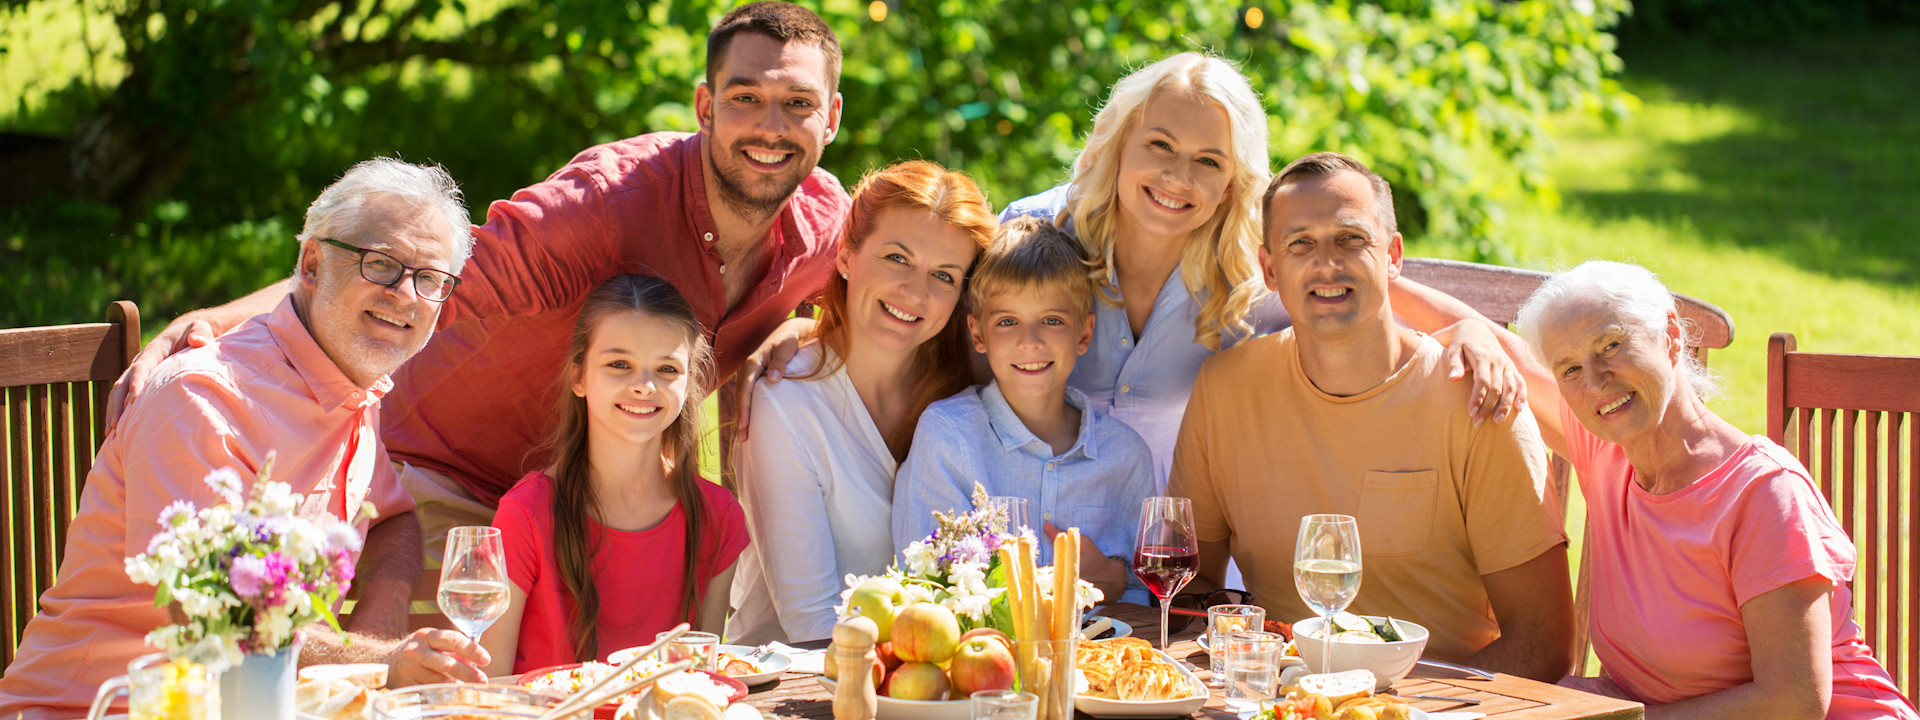 Family enjoying outdoor dining and farm fresh food